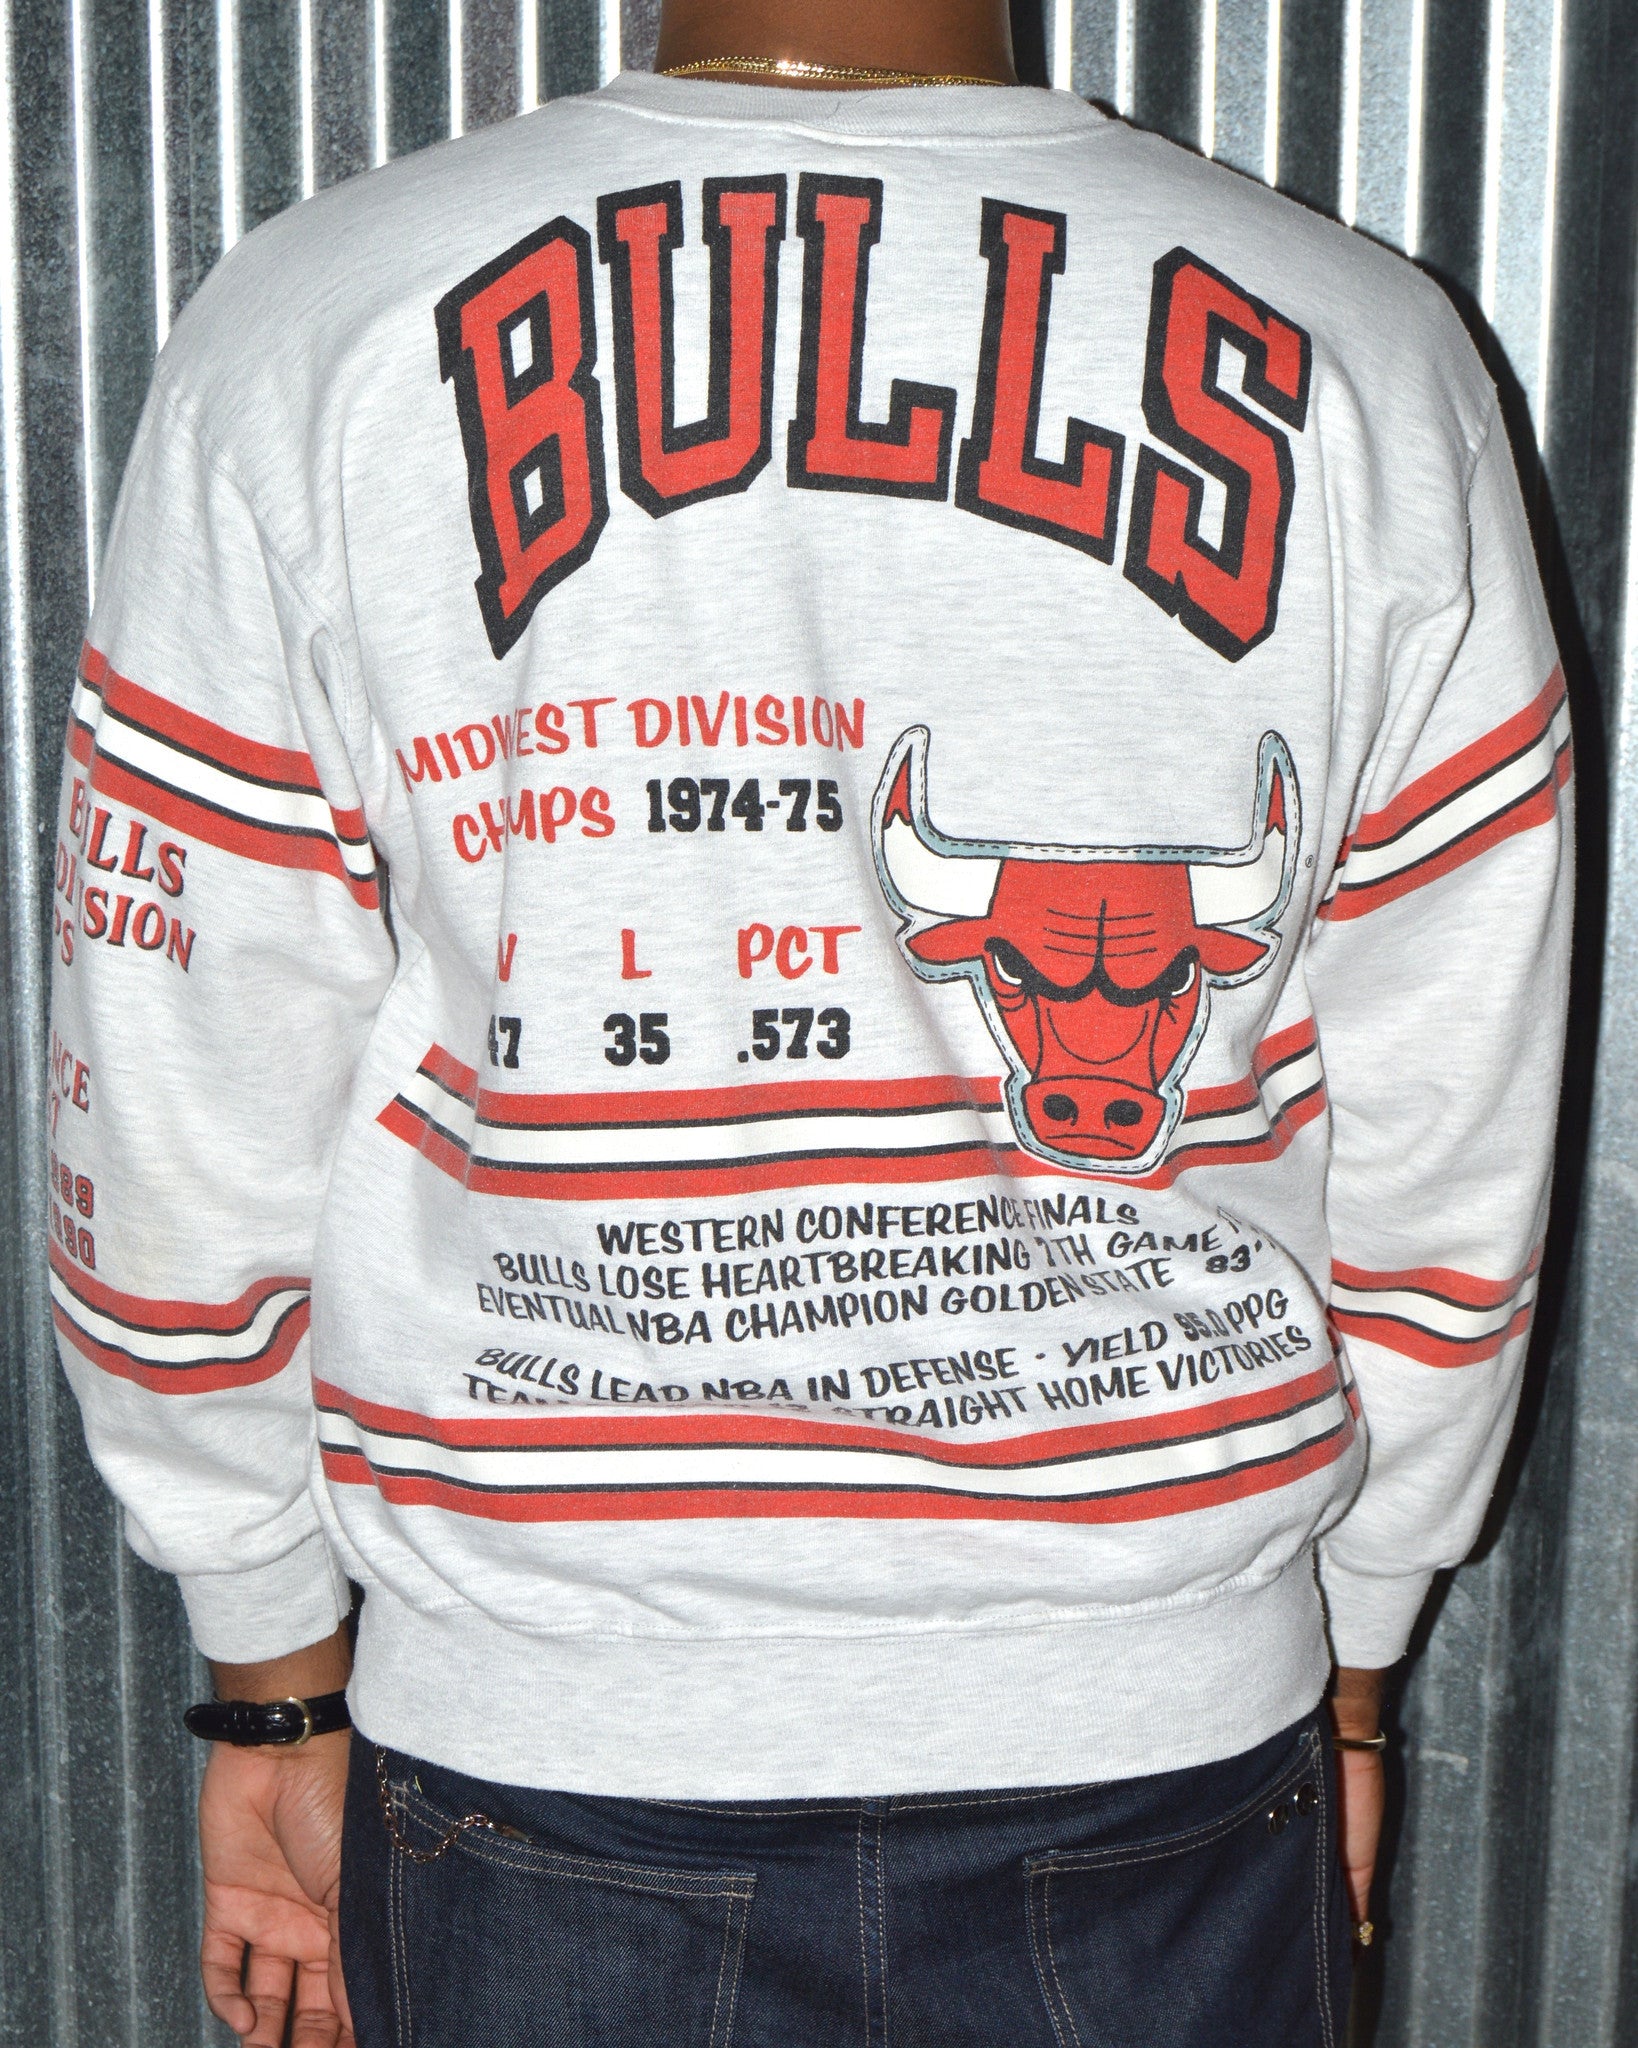 Vintage Nba Chicago Bulls Shirt, Chicago Bulls Sweatshirt Unisex T-shirt